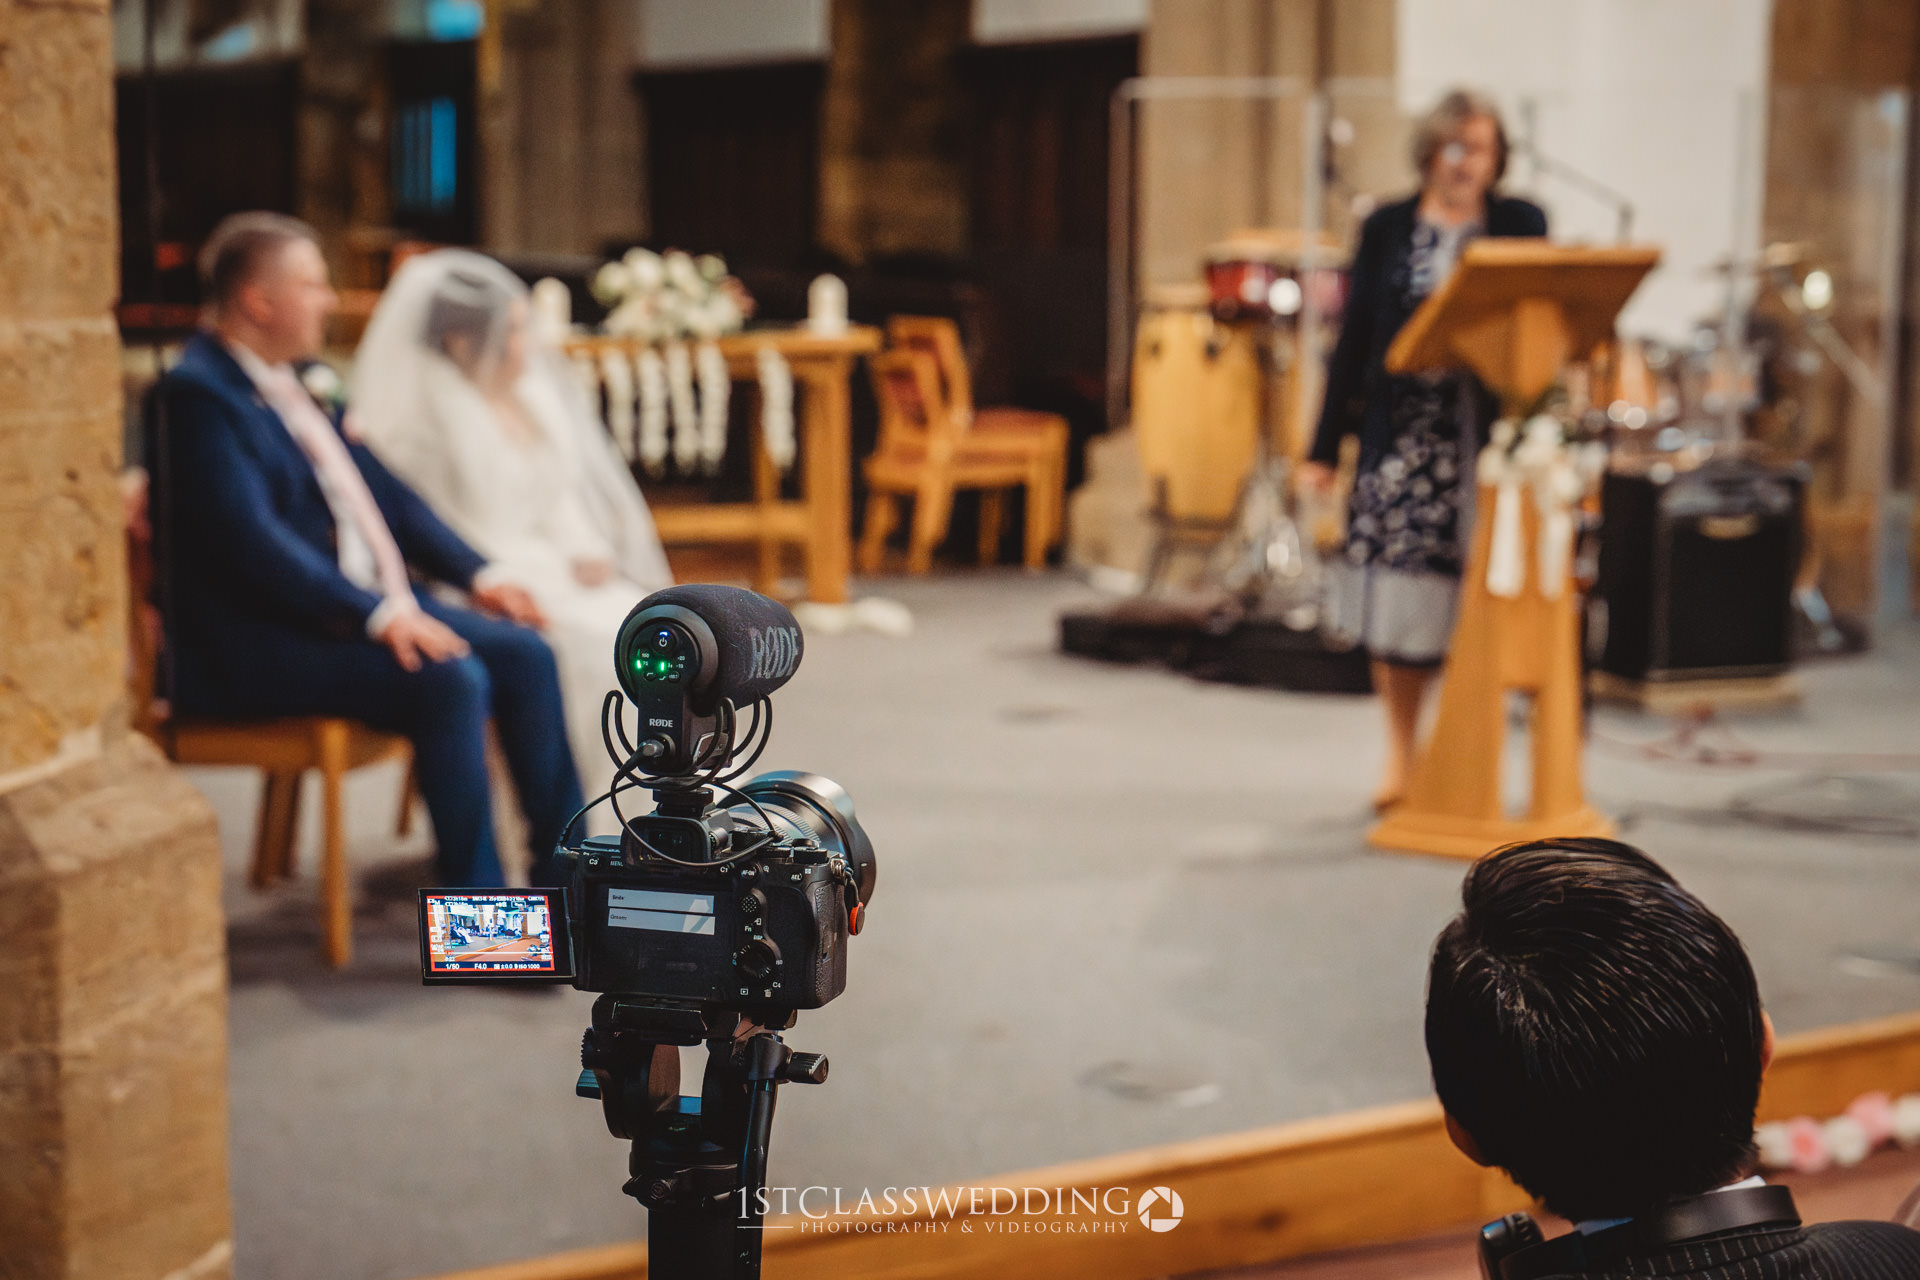 Wedding ceremony filming in progress inside church.